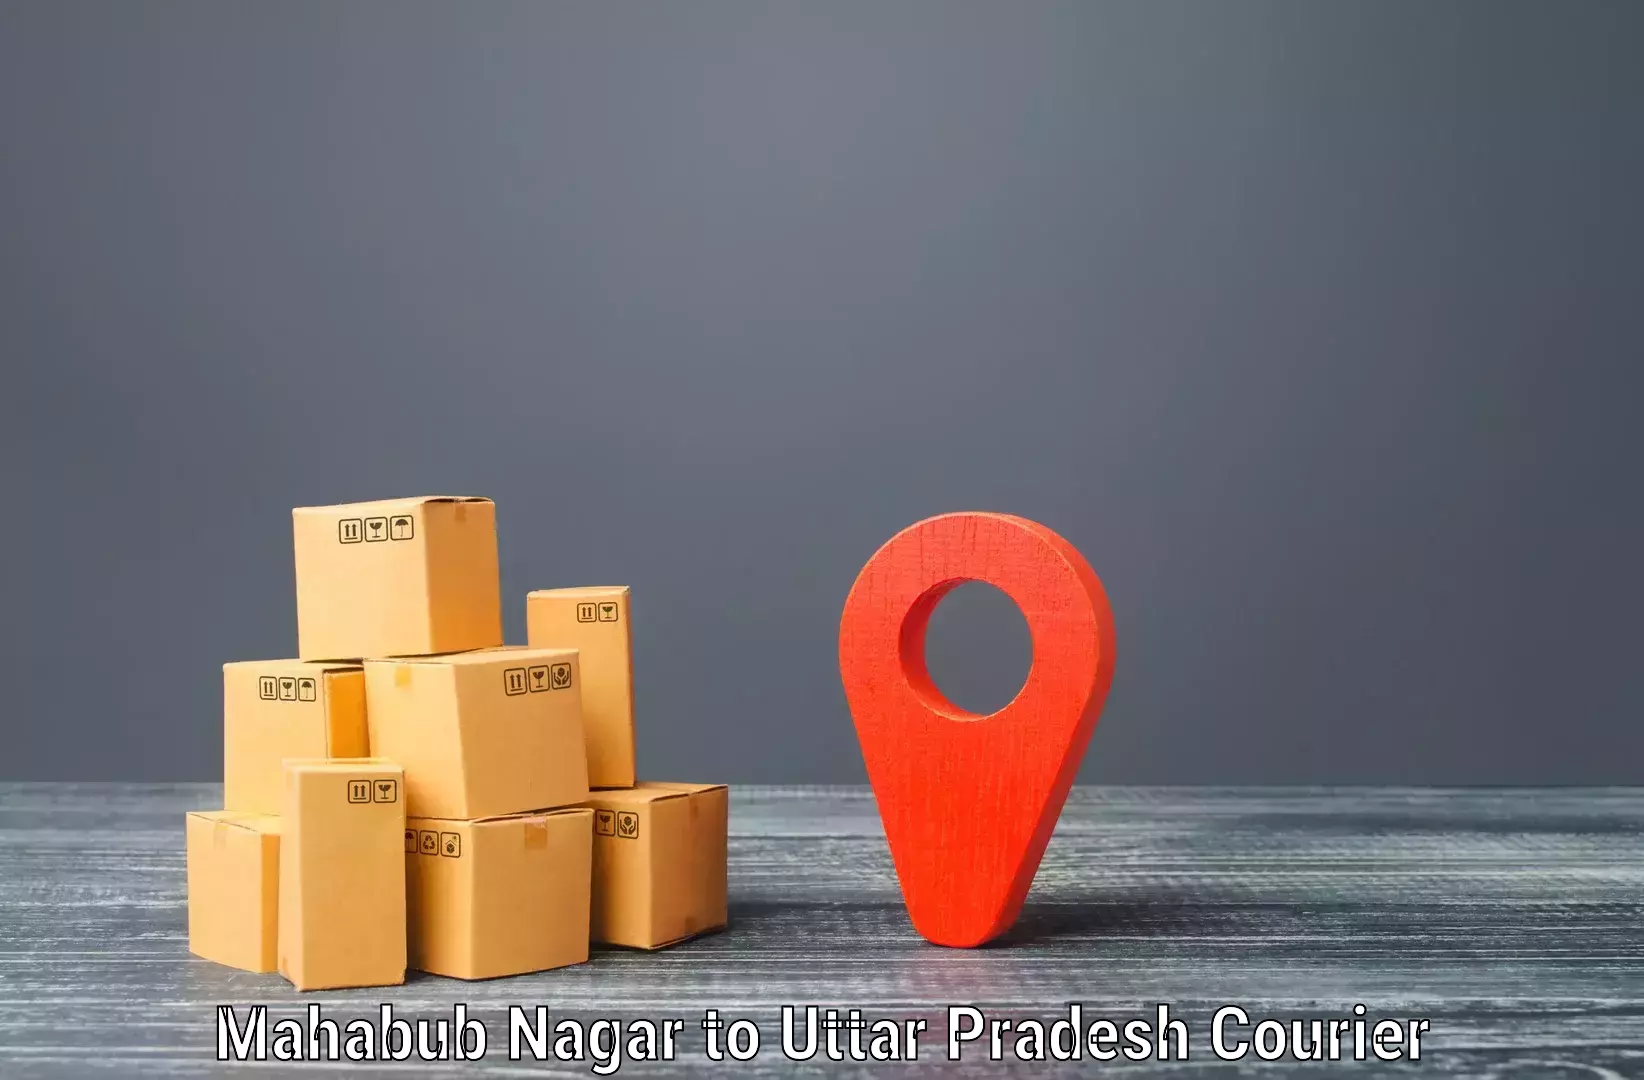 Expedited parcel delivery Mahabub Nagar to Amethi